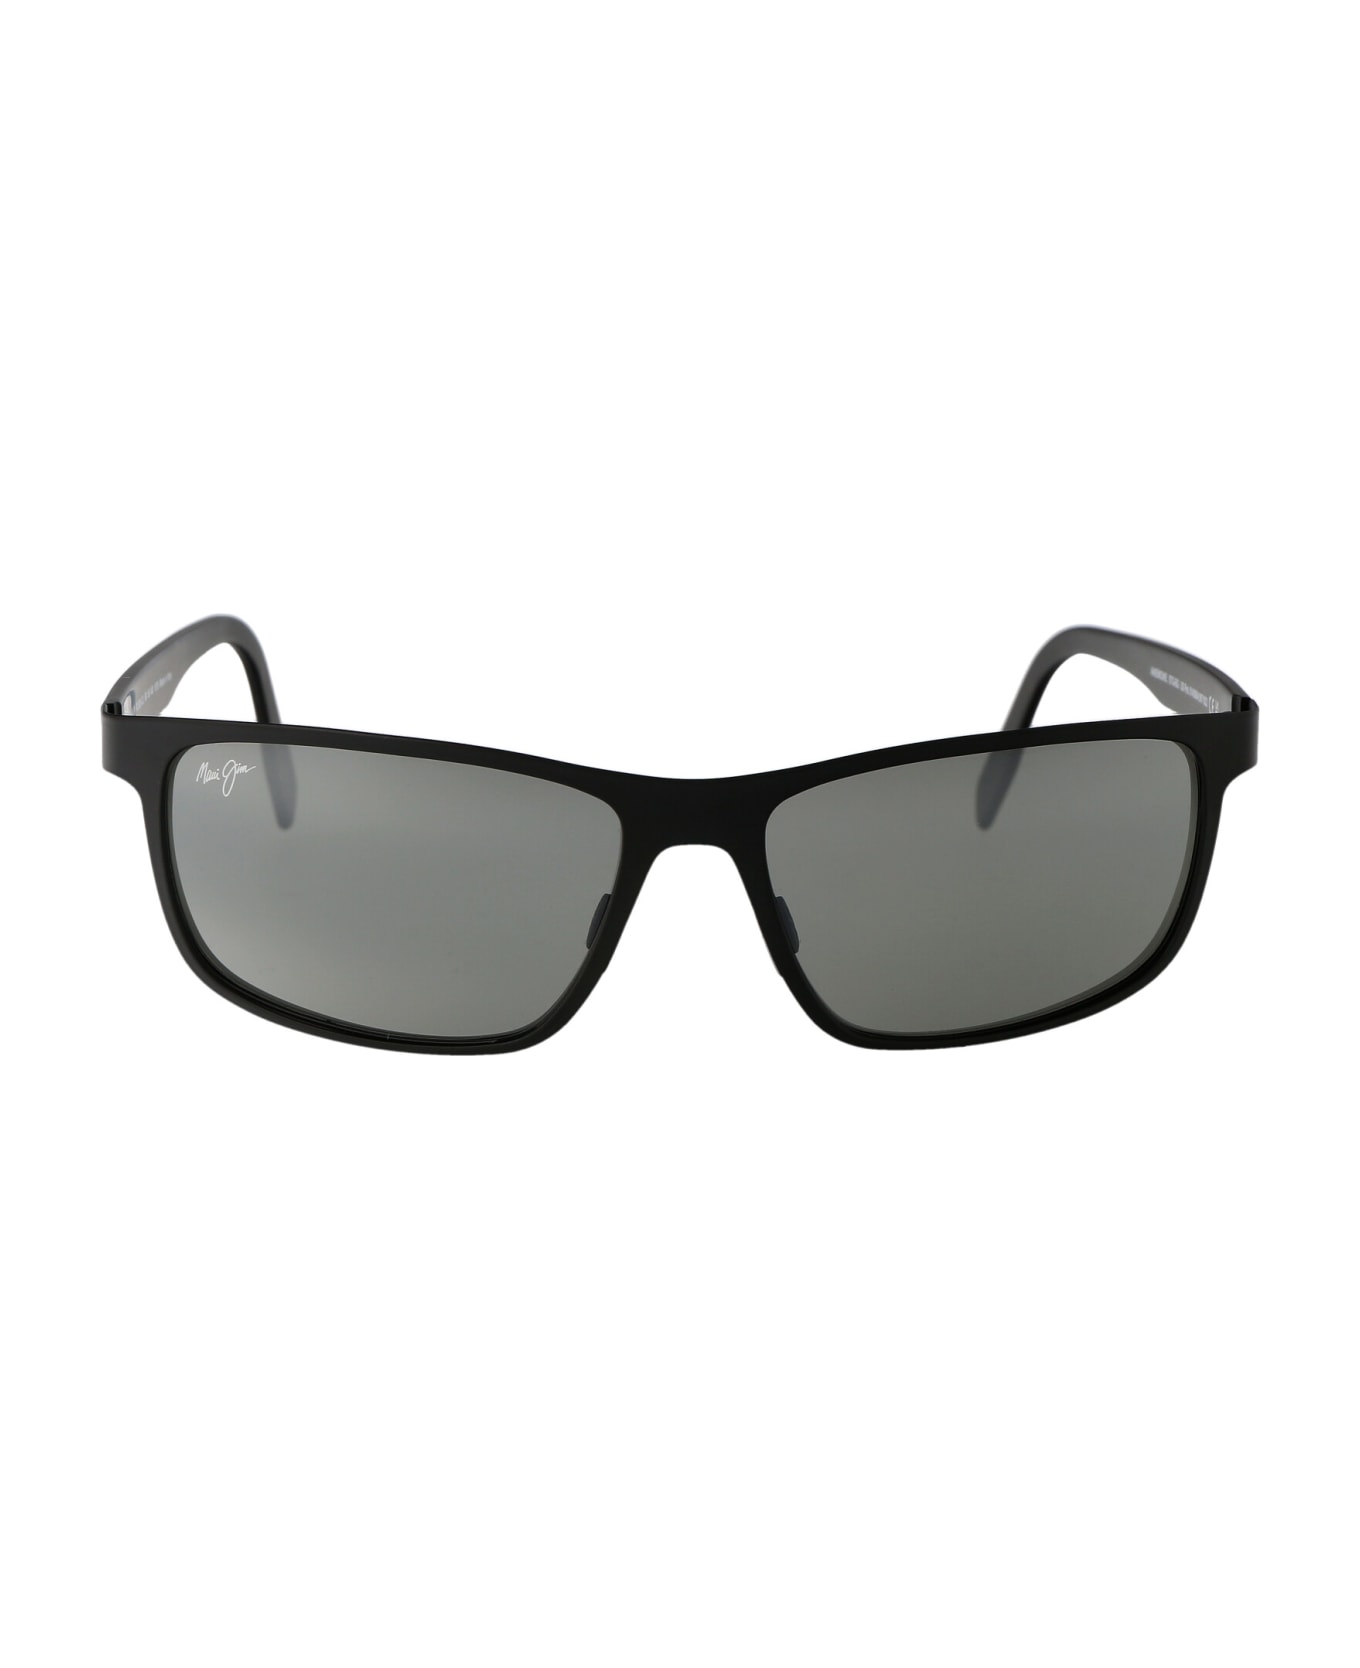 Maui Jim Anemone Sunglasses - 02 SATIN BLACK